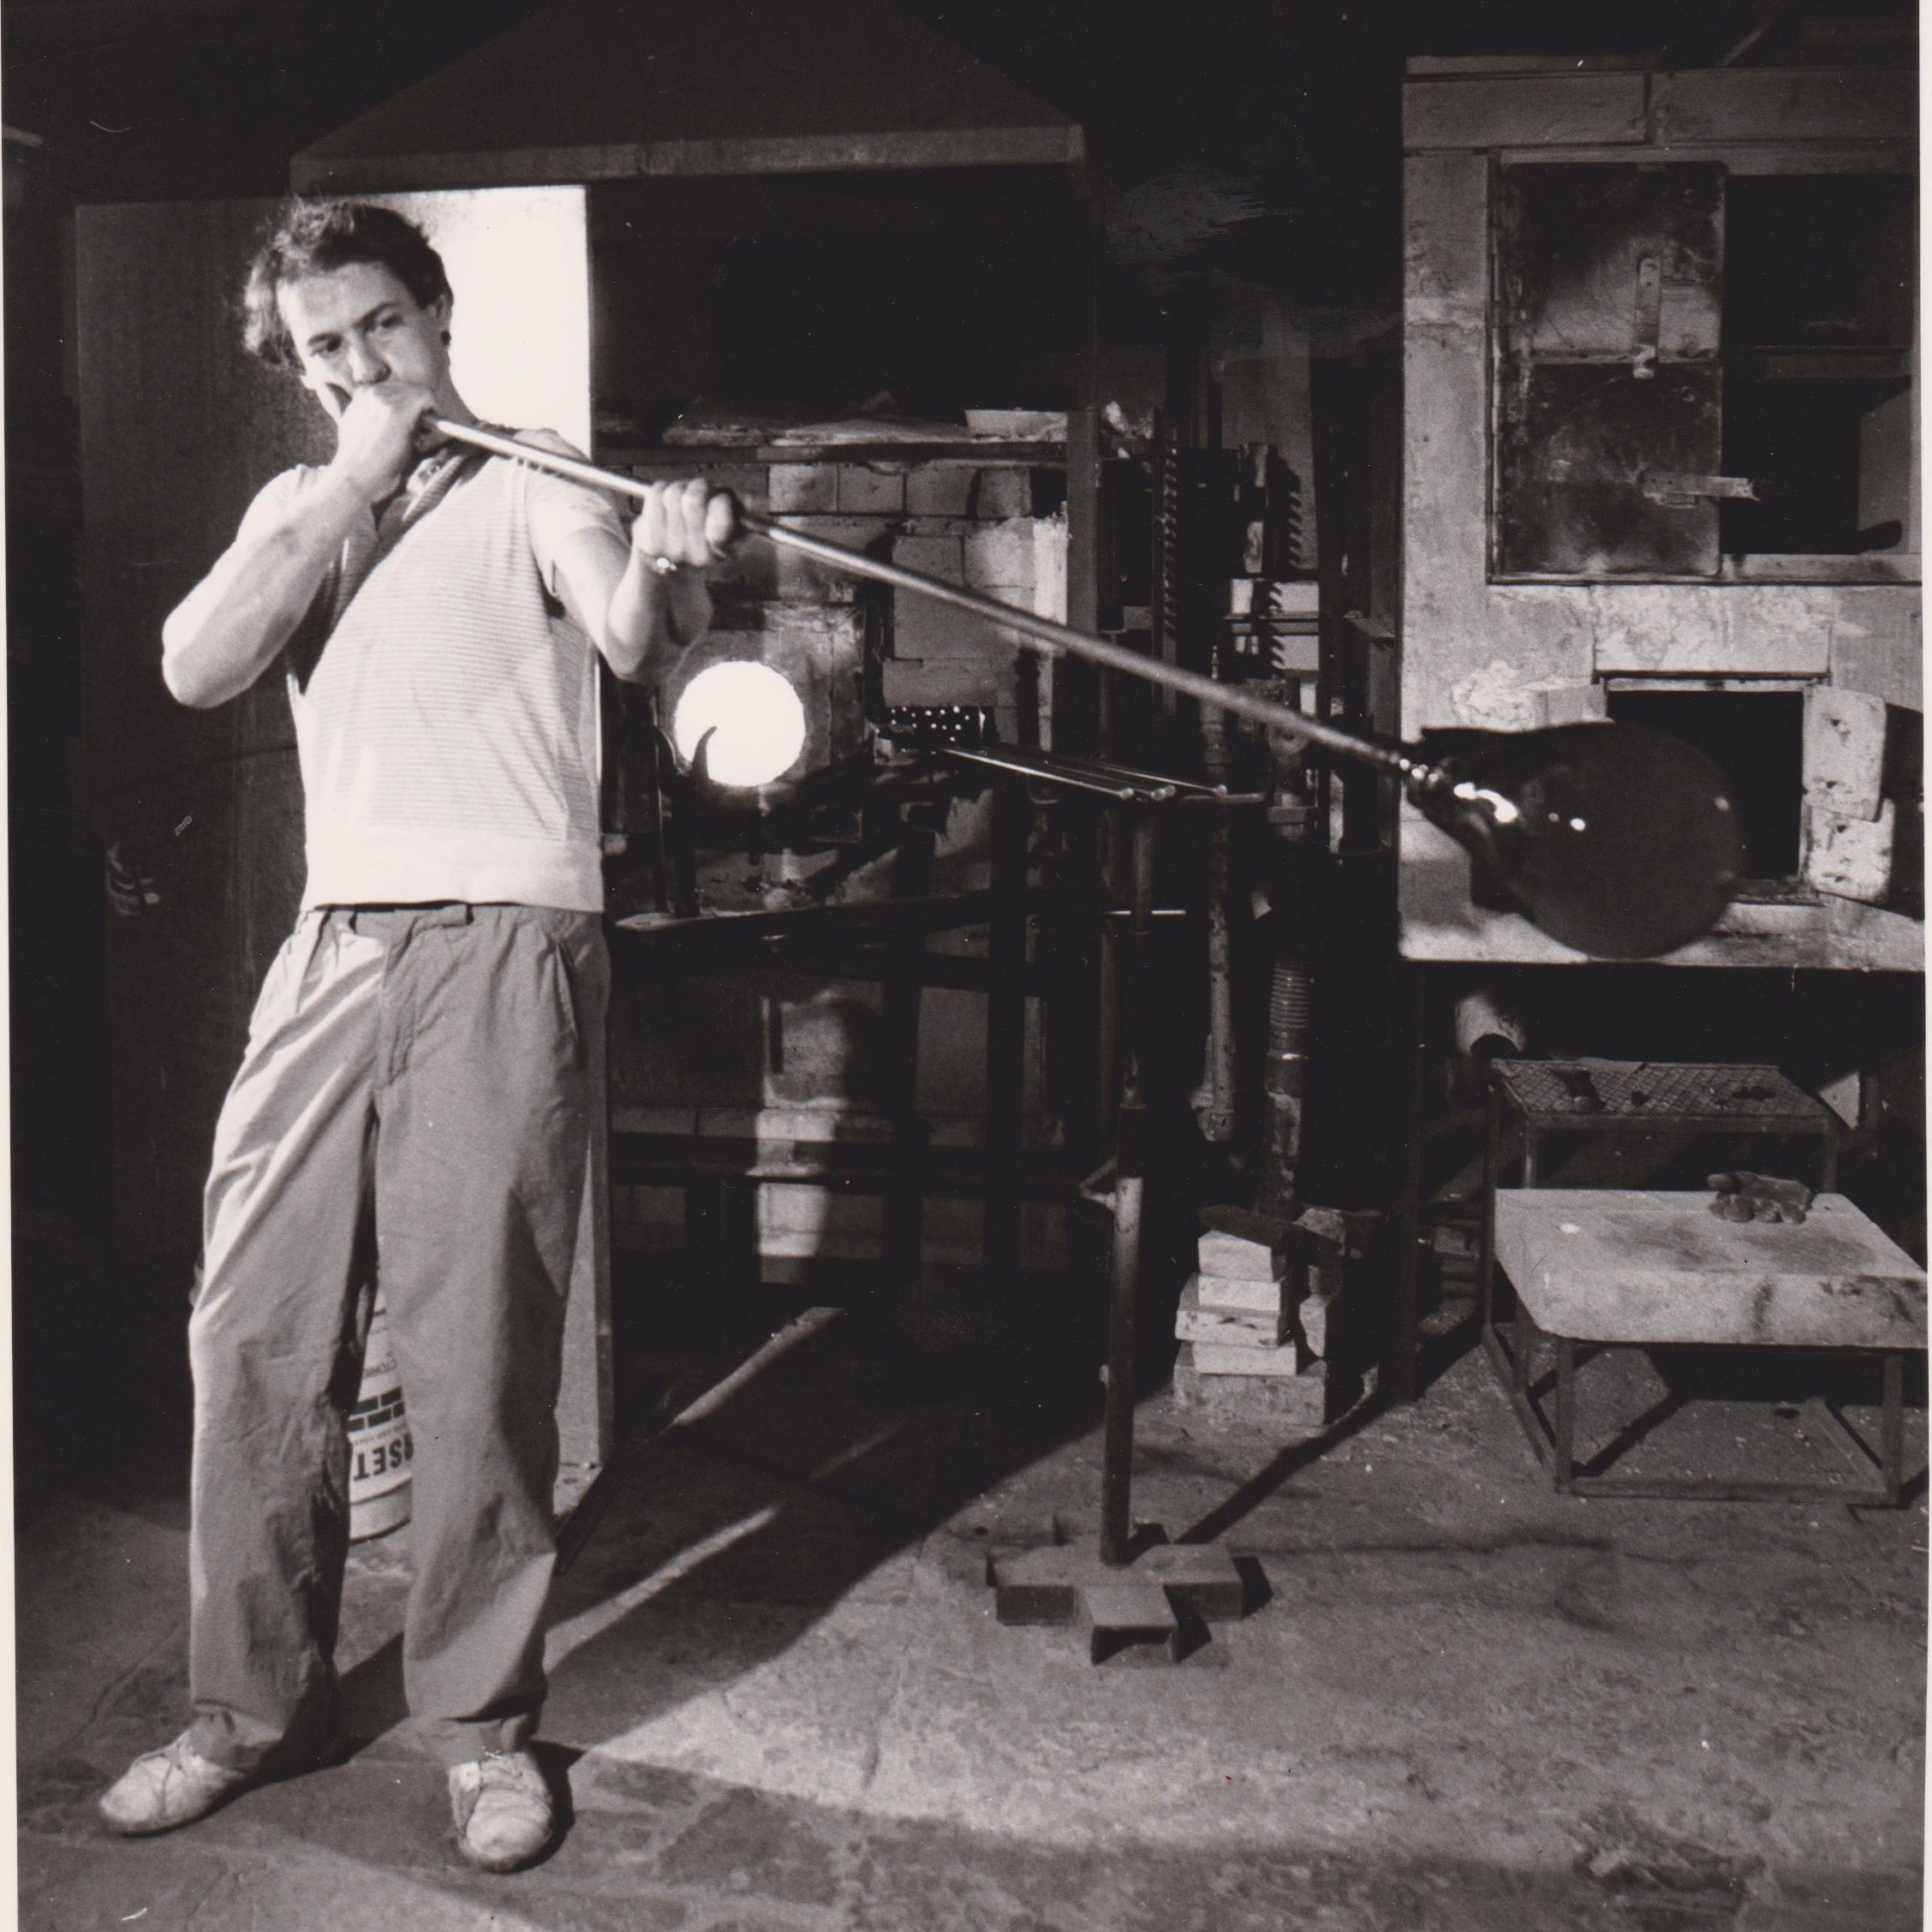 John blowing in the original Glasform studio in teh early 1980's.